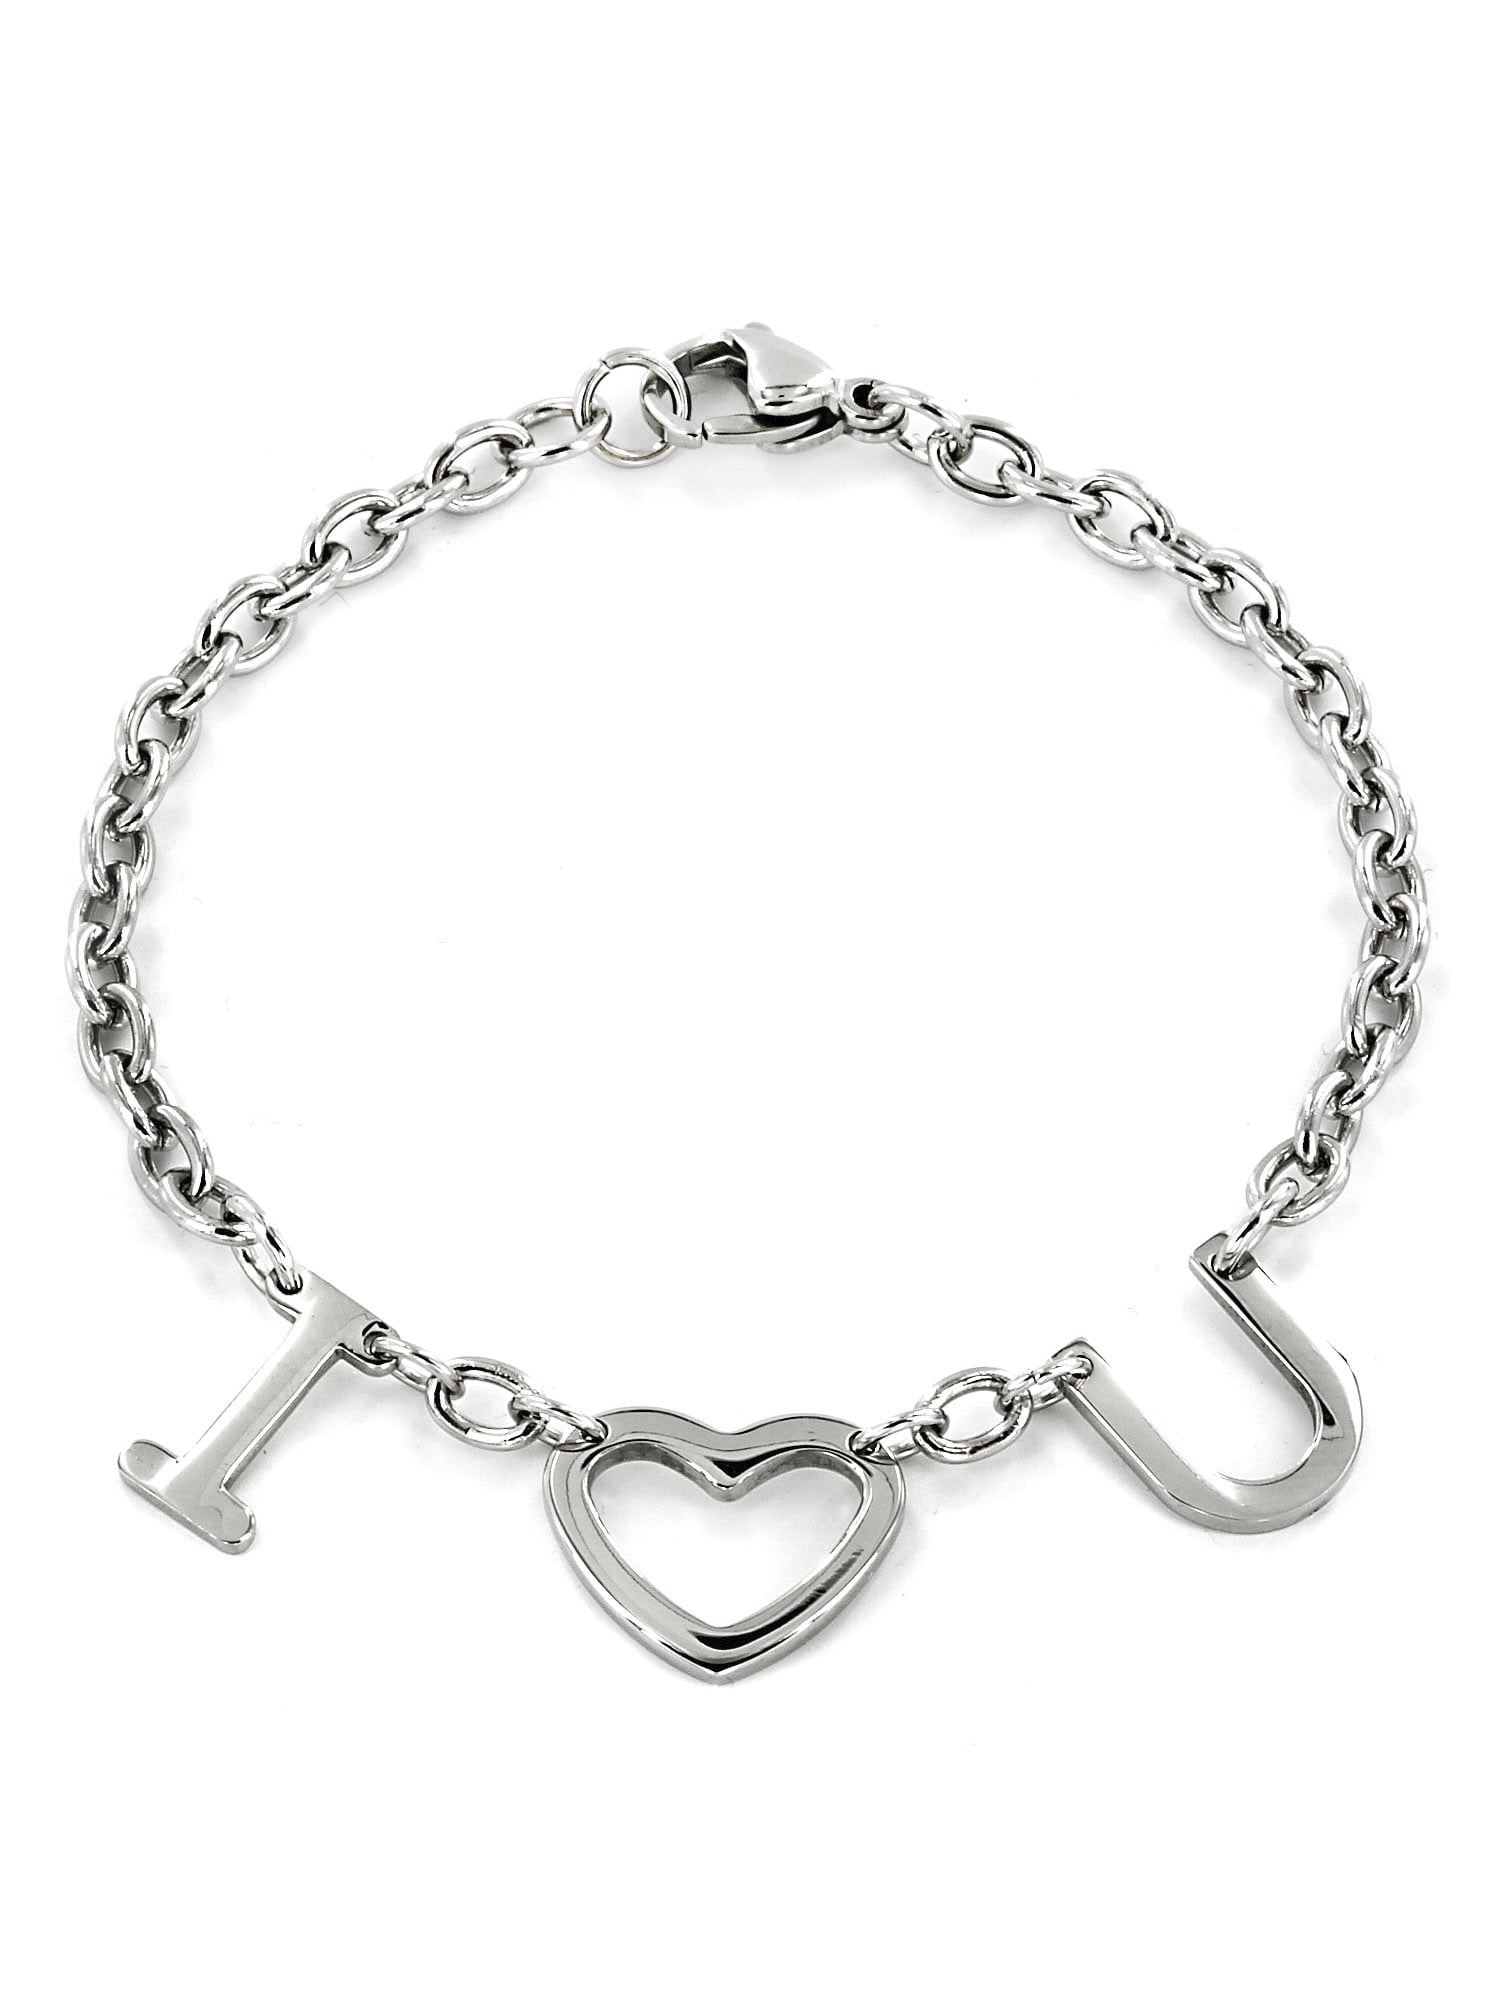 Artwork Store Adjustable Silver Bracelets Cute Cat Face Charming Fashion Chain Link Bracelets Jewelry for Women